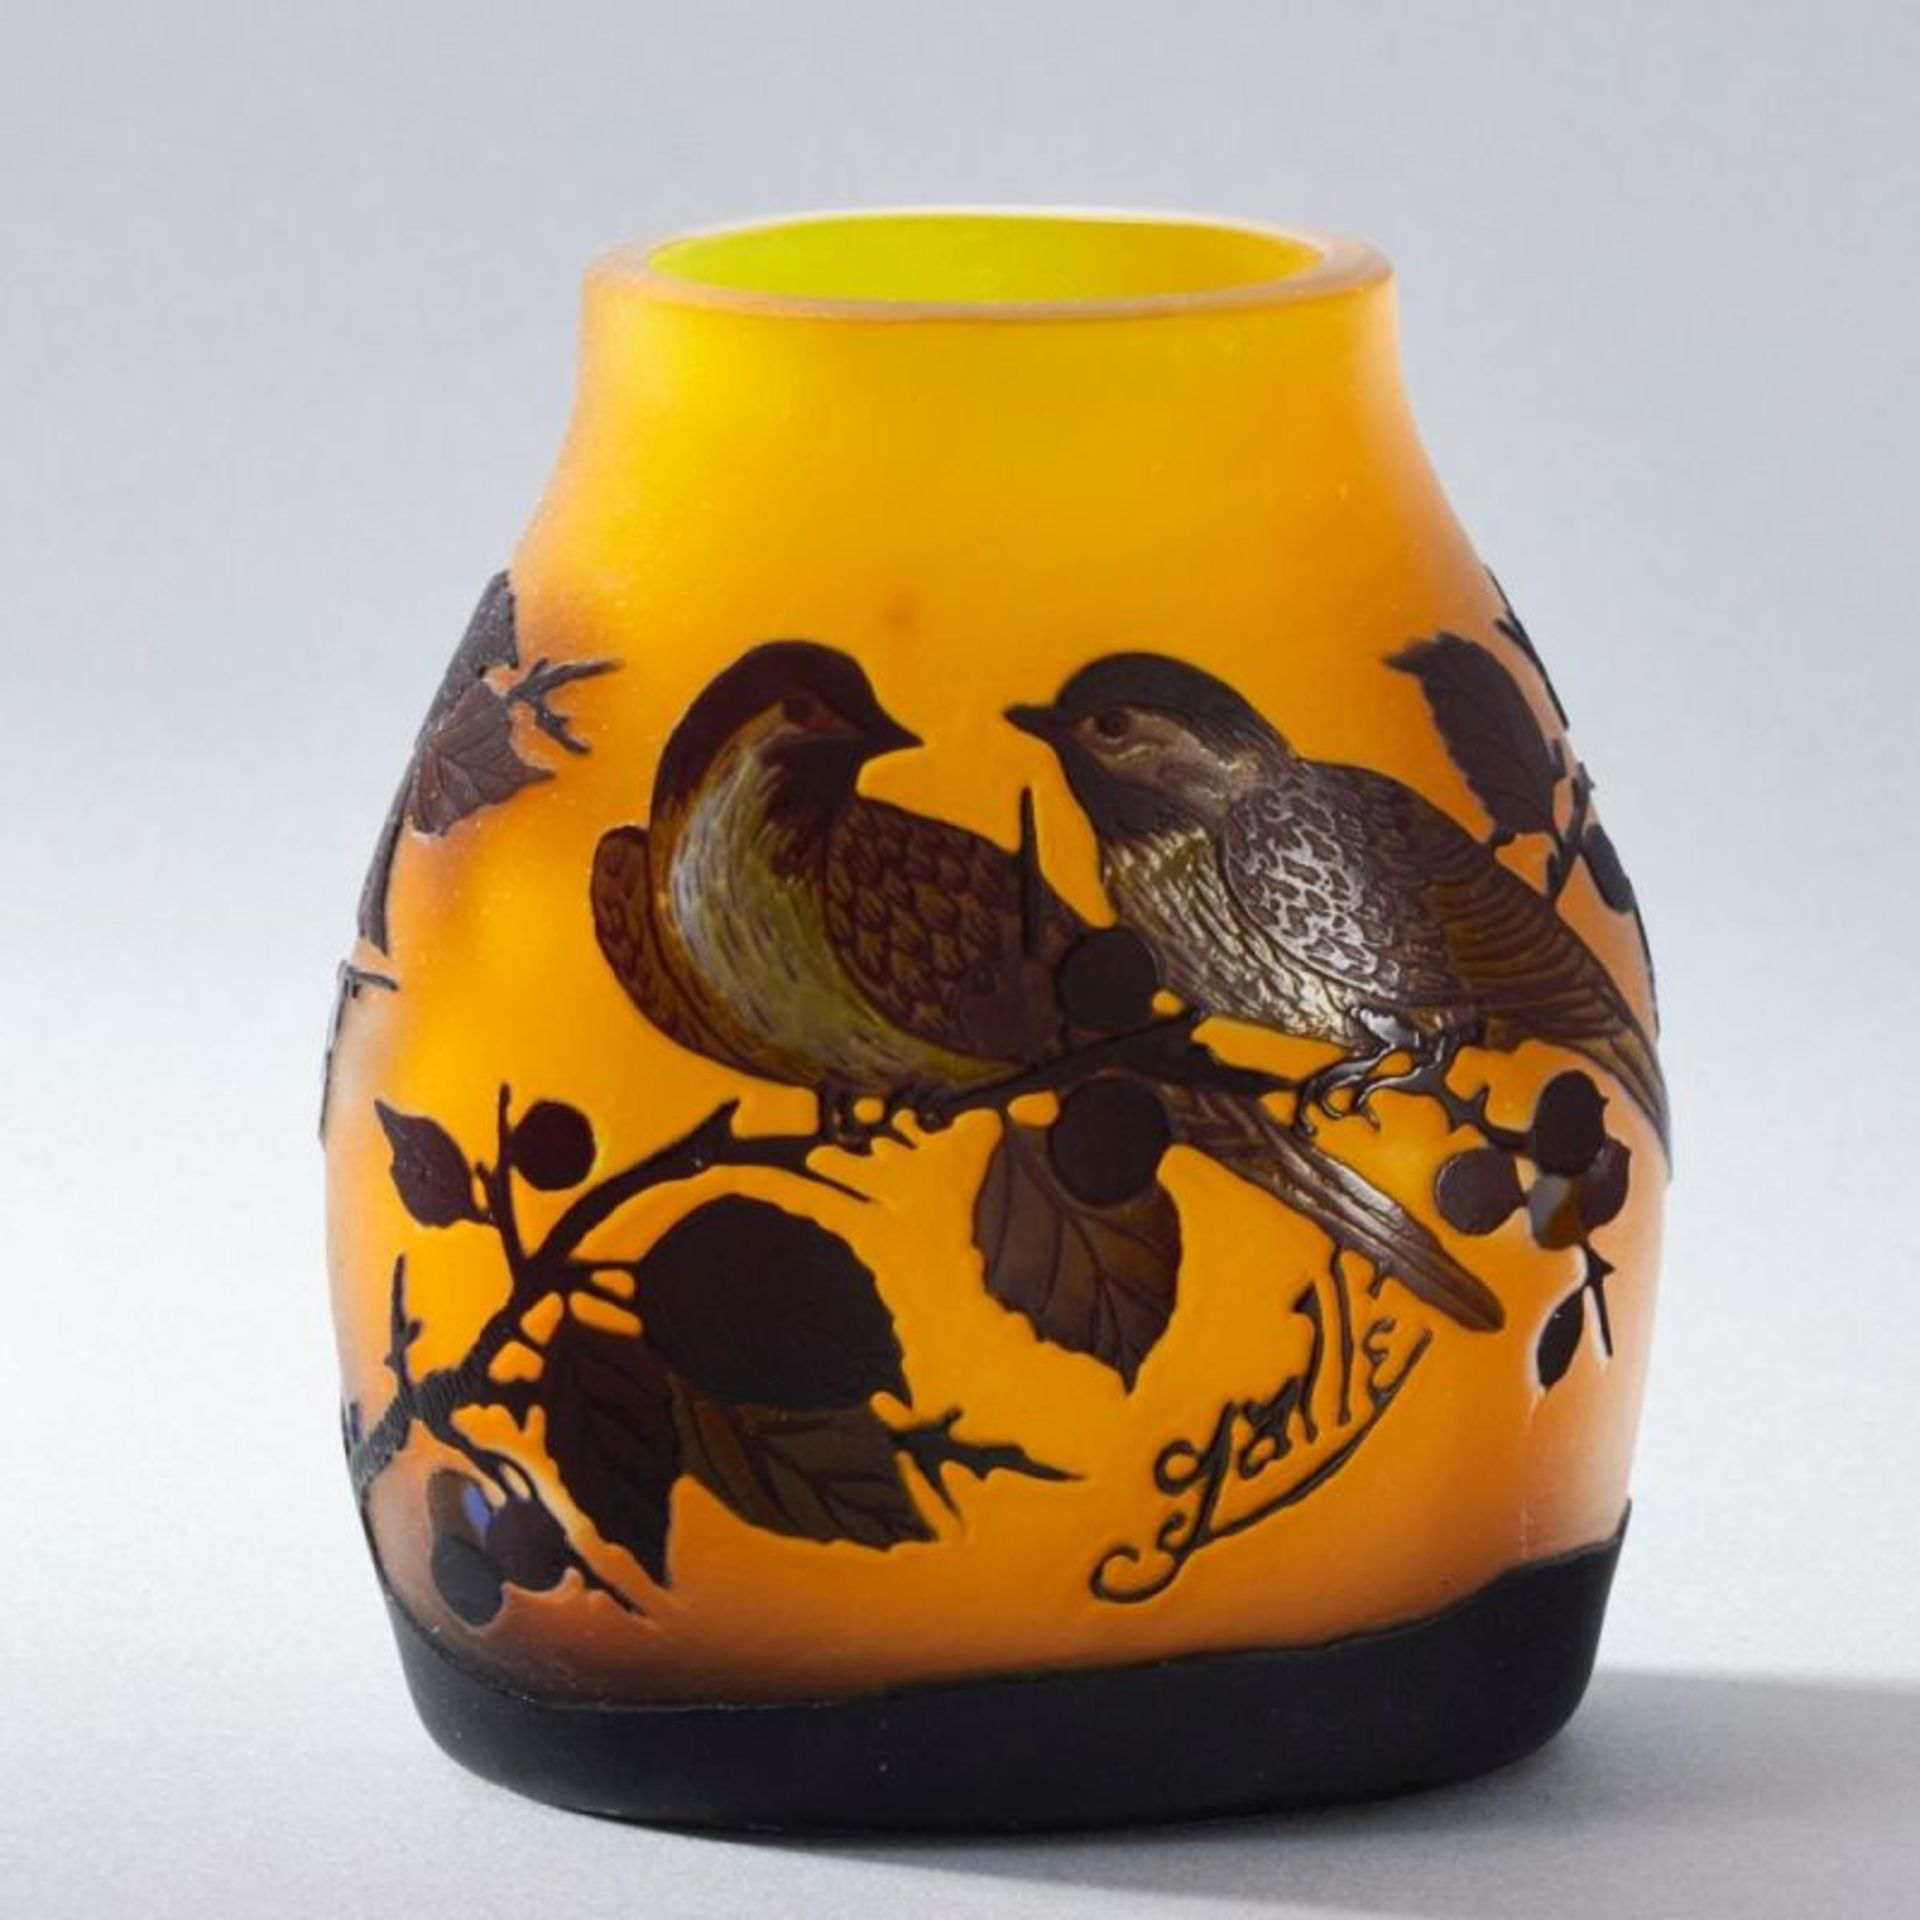 Ovale Vase - Vögel auf Ast. Azuga, Rumänien um 1990.